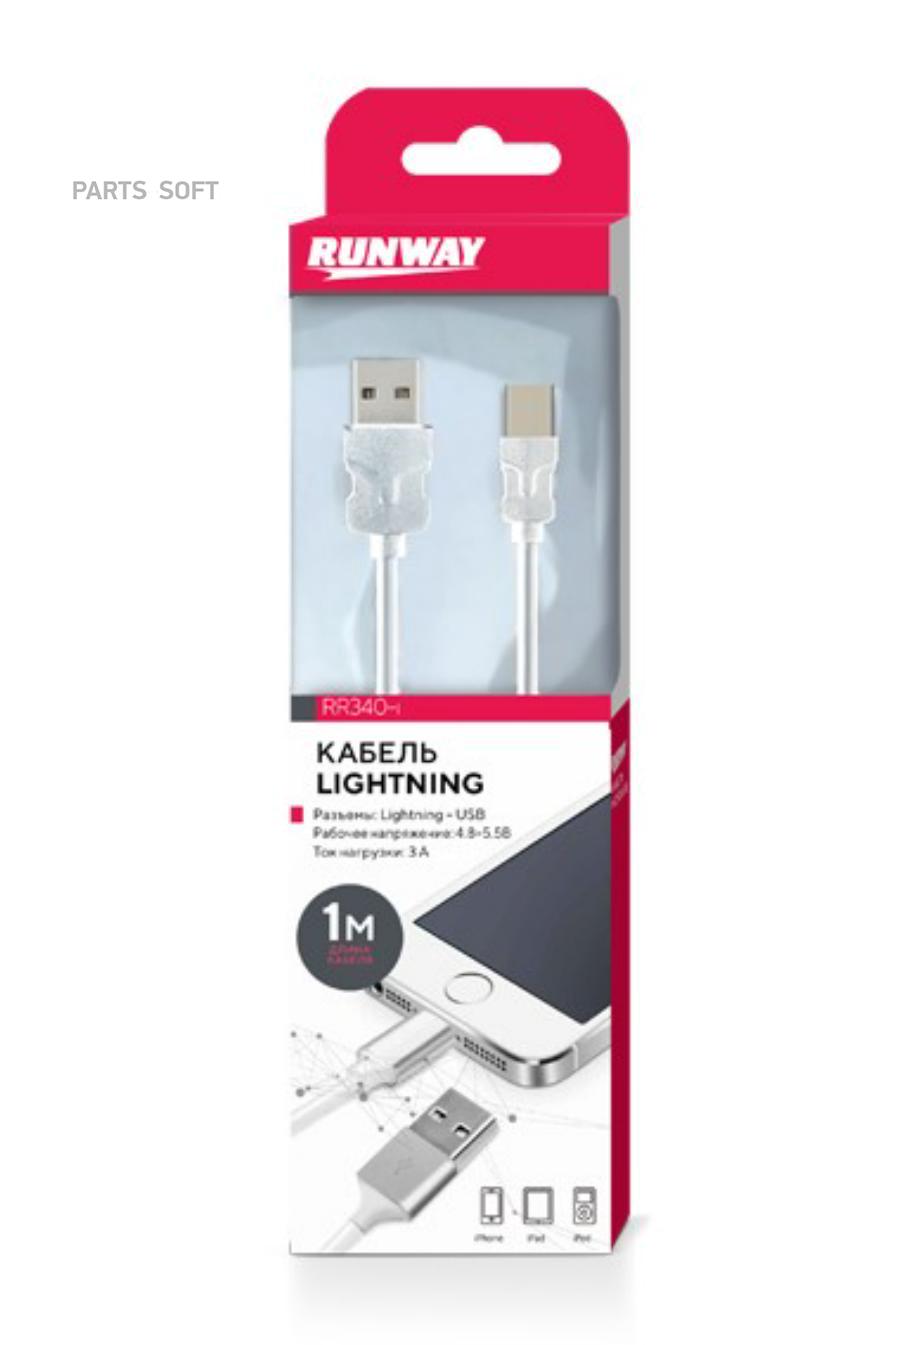 Аксессуар Runway USB - Lightning 1m White RR340-i